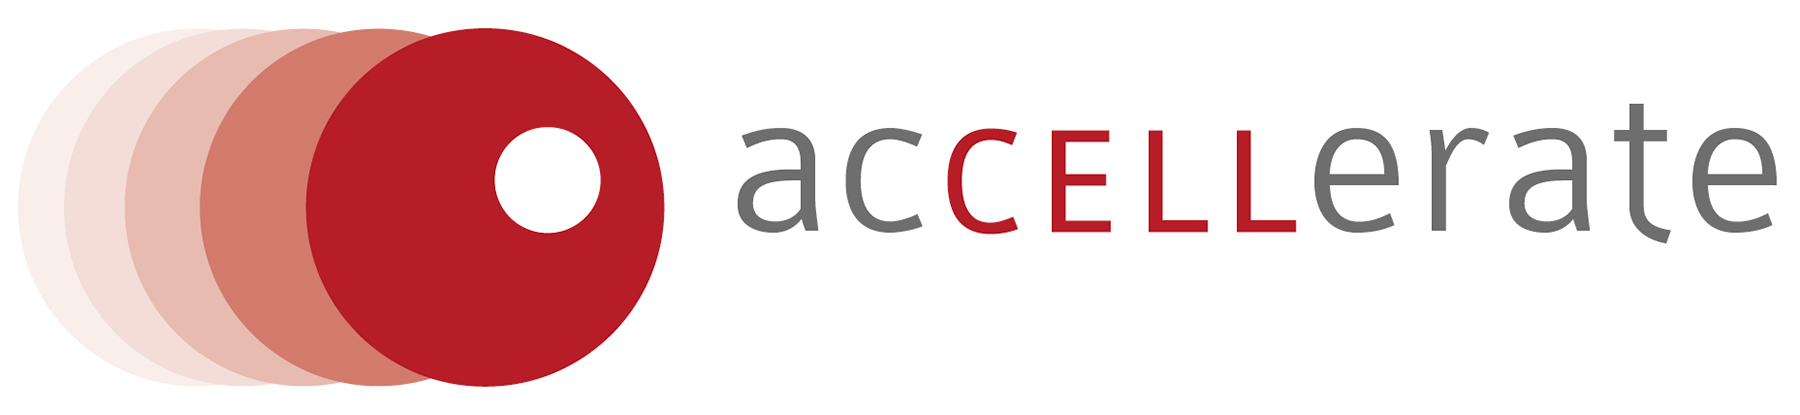 acCELLerate Logo